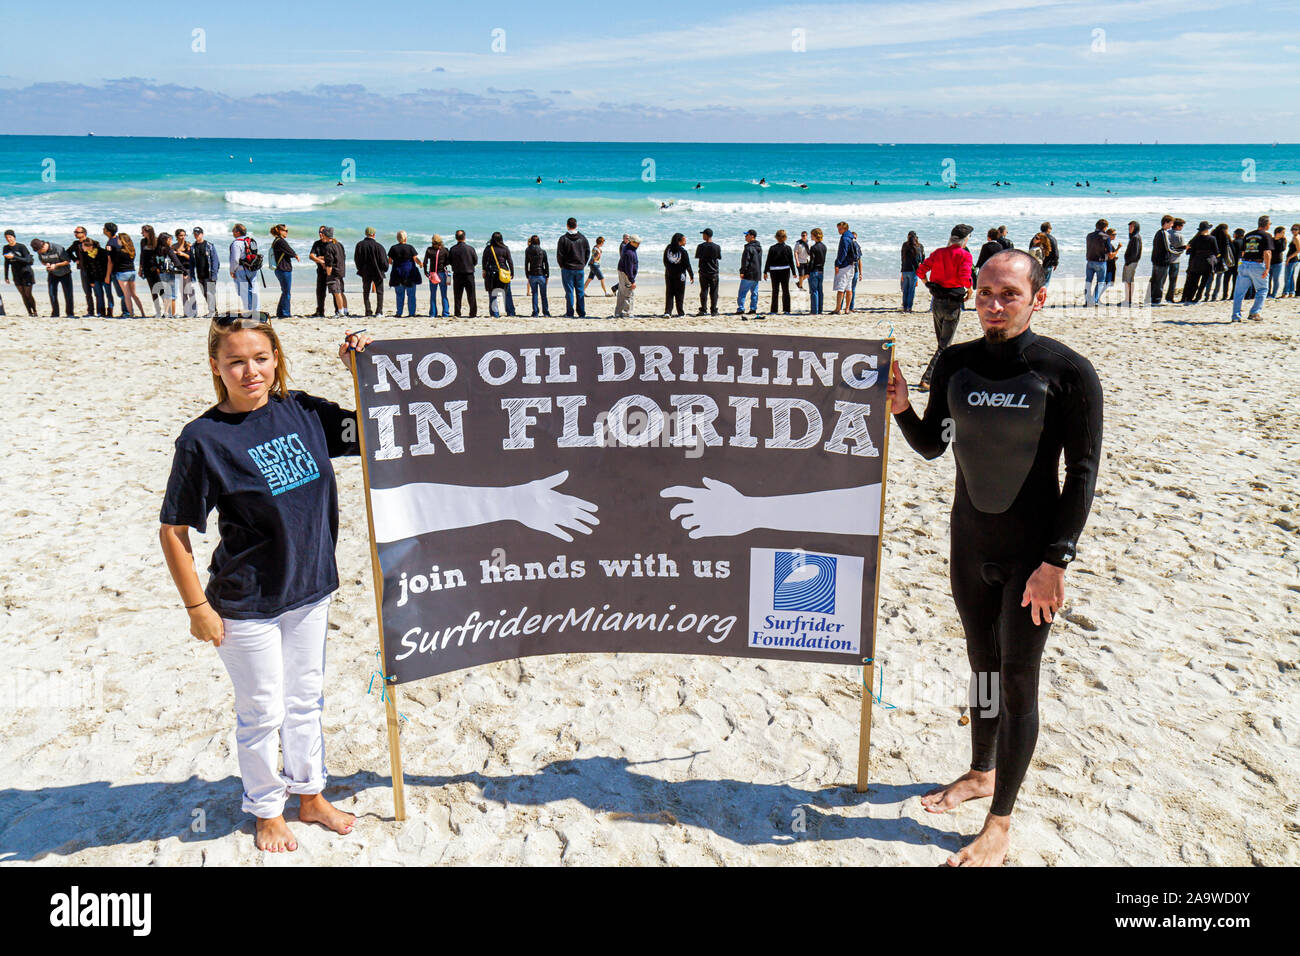 Miami Beach Florida,Surfrider Foundation,No Offshore Florida Oil Drilling Protest,Black clothing represents oil,sign,Atlantic Ocean,water,surf,FL10021 Stock Photo